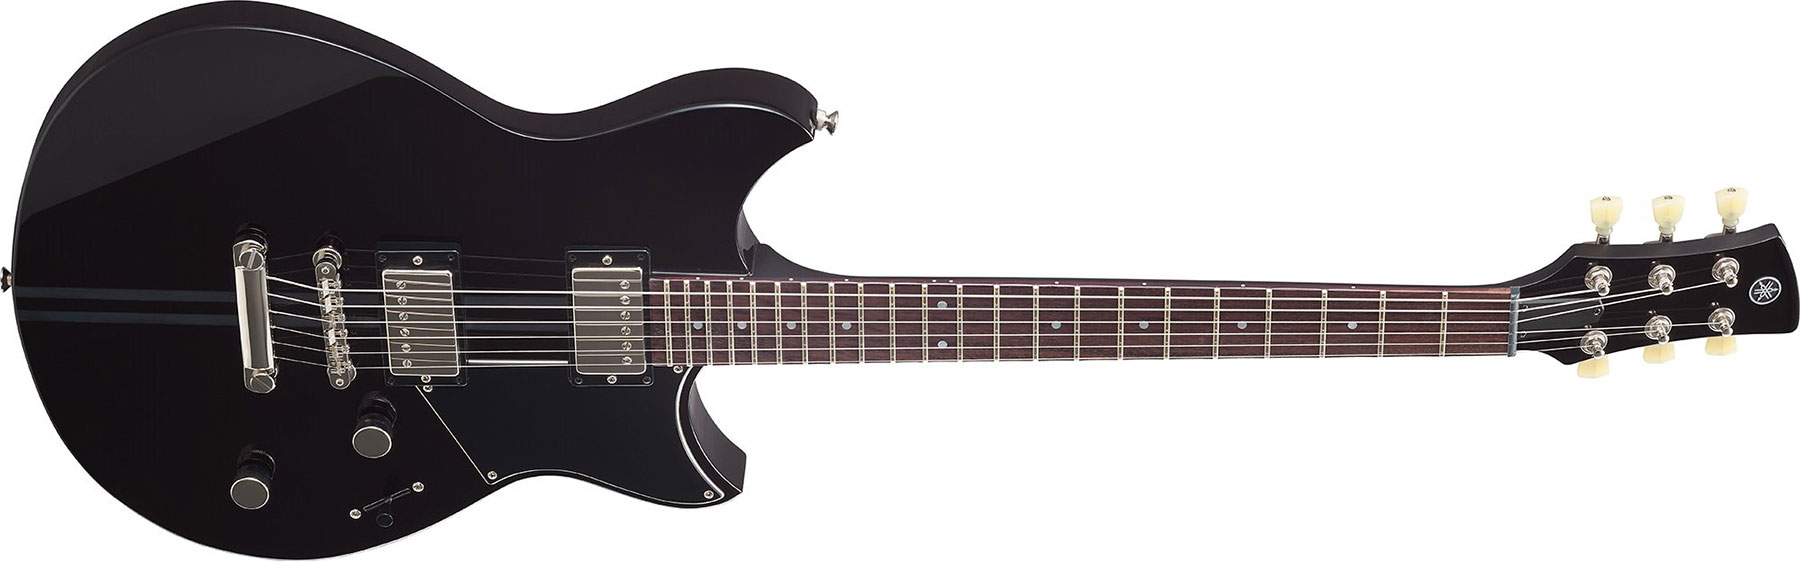 Yamaha Rse20 Revstar Element Hh Ht Rw - Black - Double Cut E-Gitarre - Variation 2